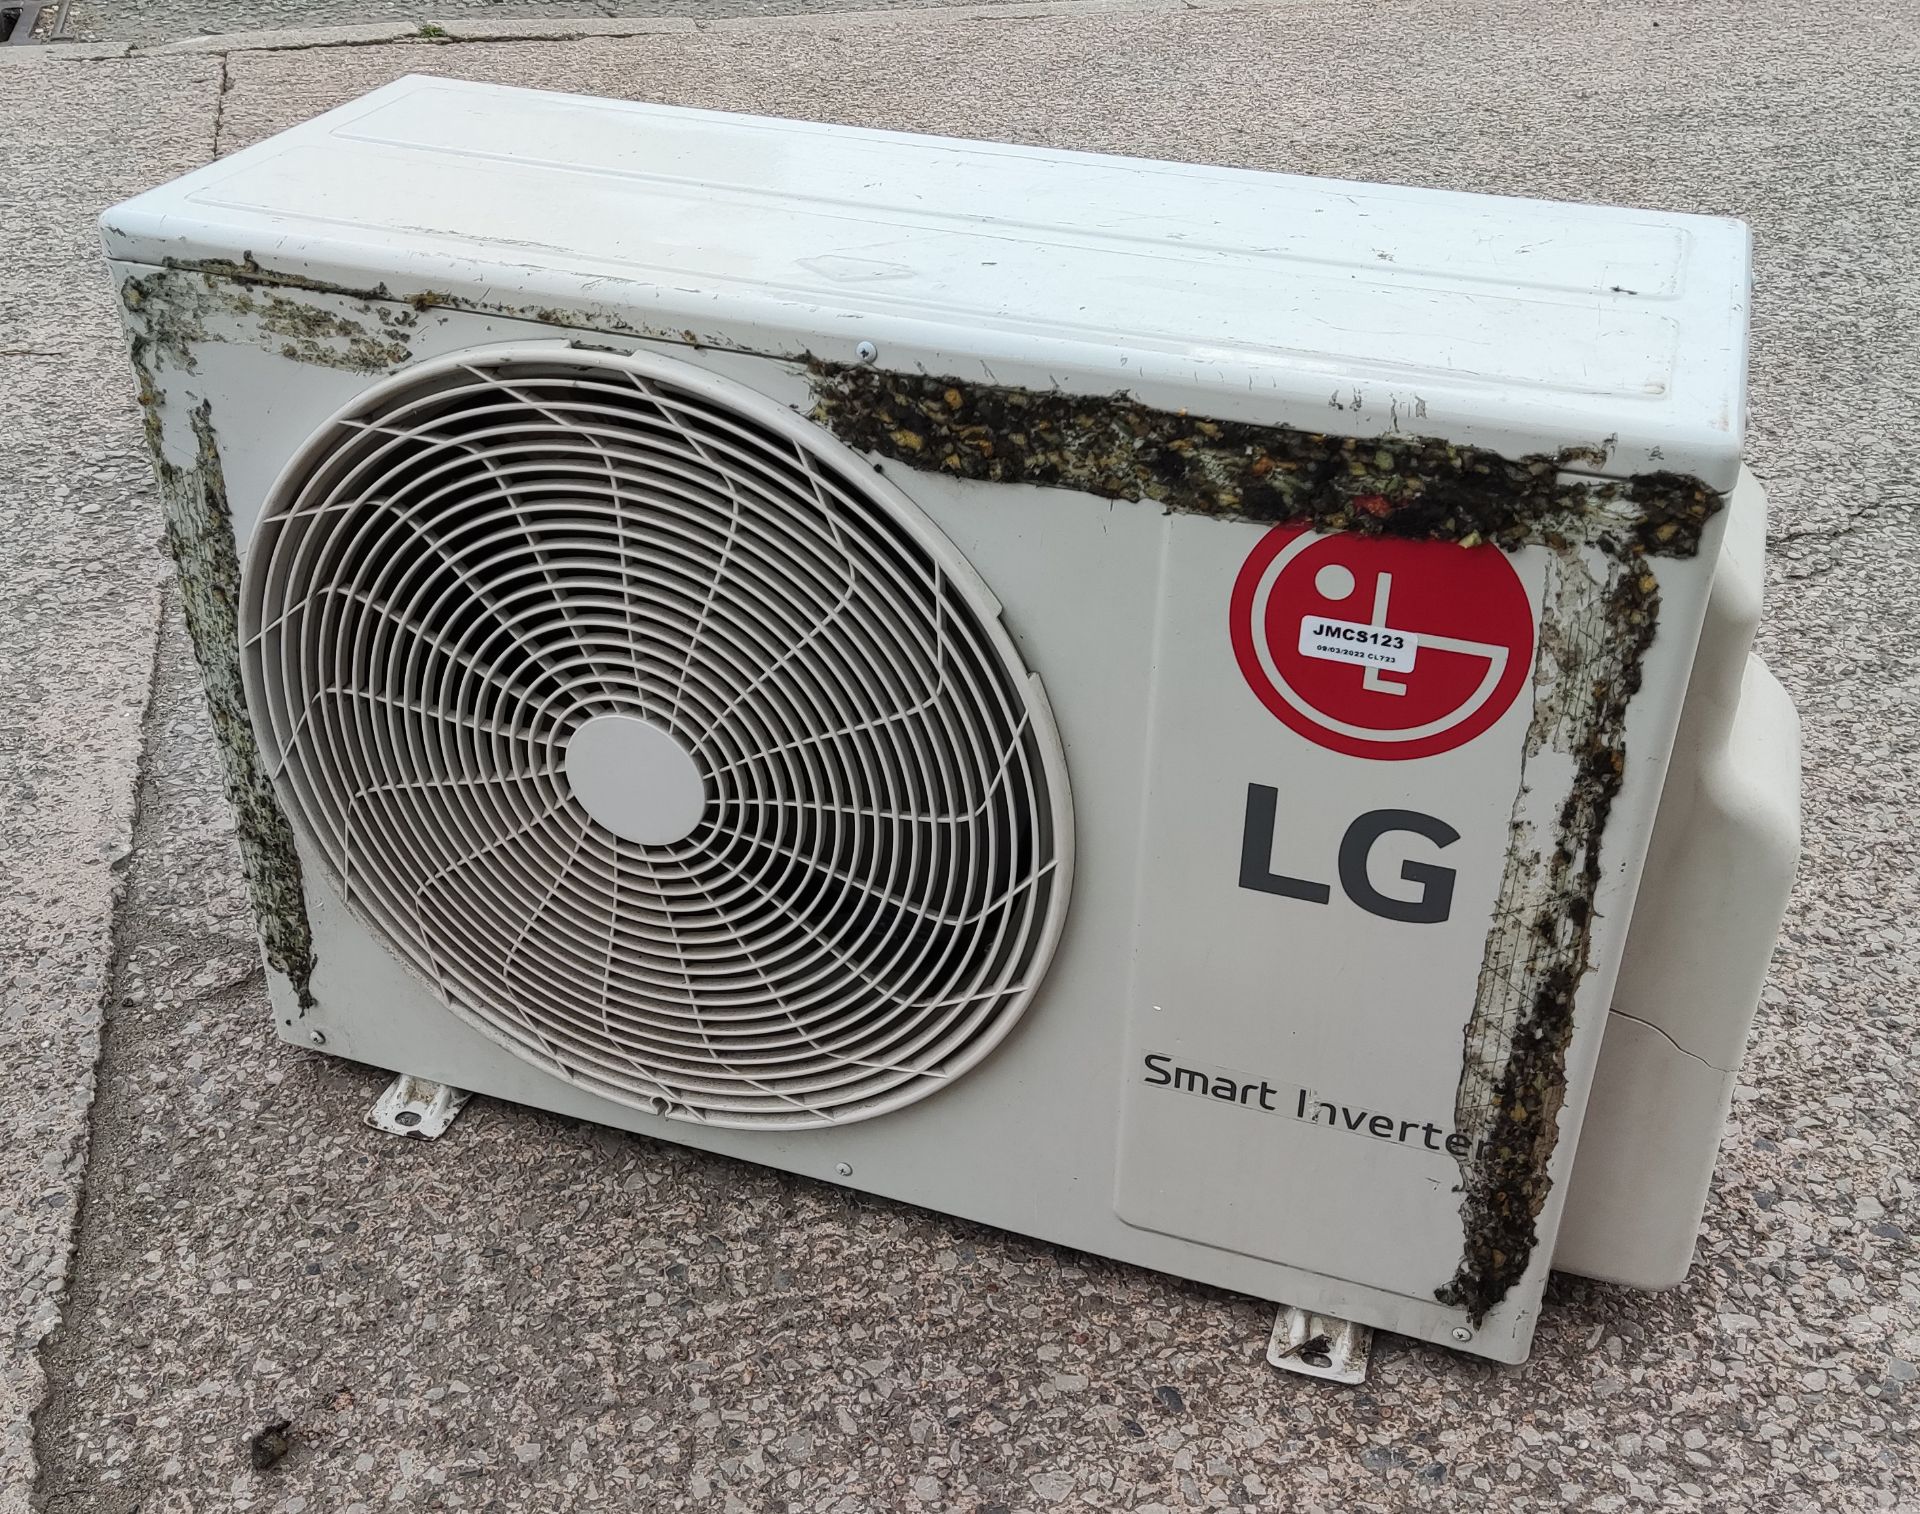 1 x LG Smart Inverter Split Room Air Conditioner - Model: P18EN.UL2 - JMCS123 - CL723 - Location: - Image 7 of 7